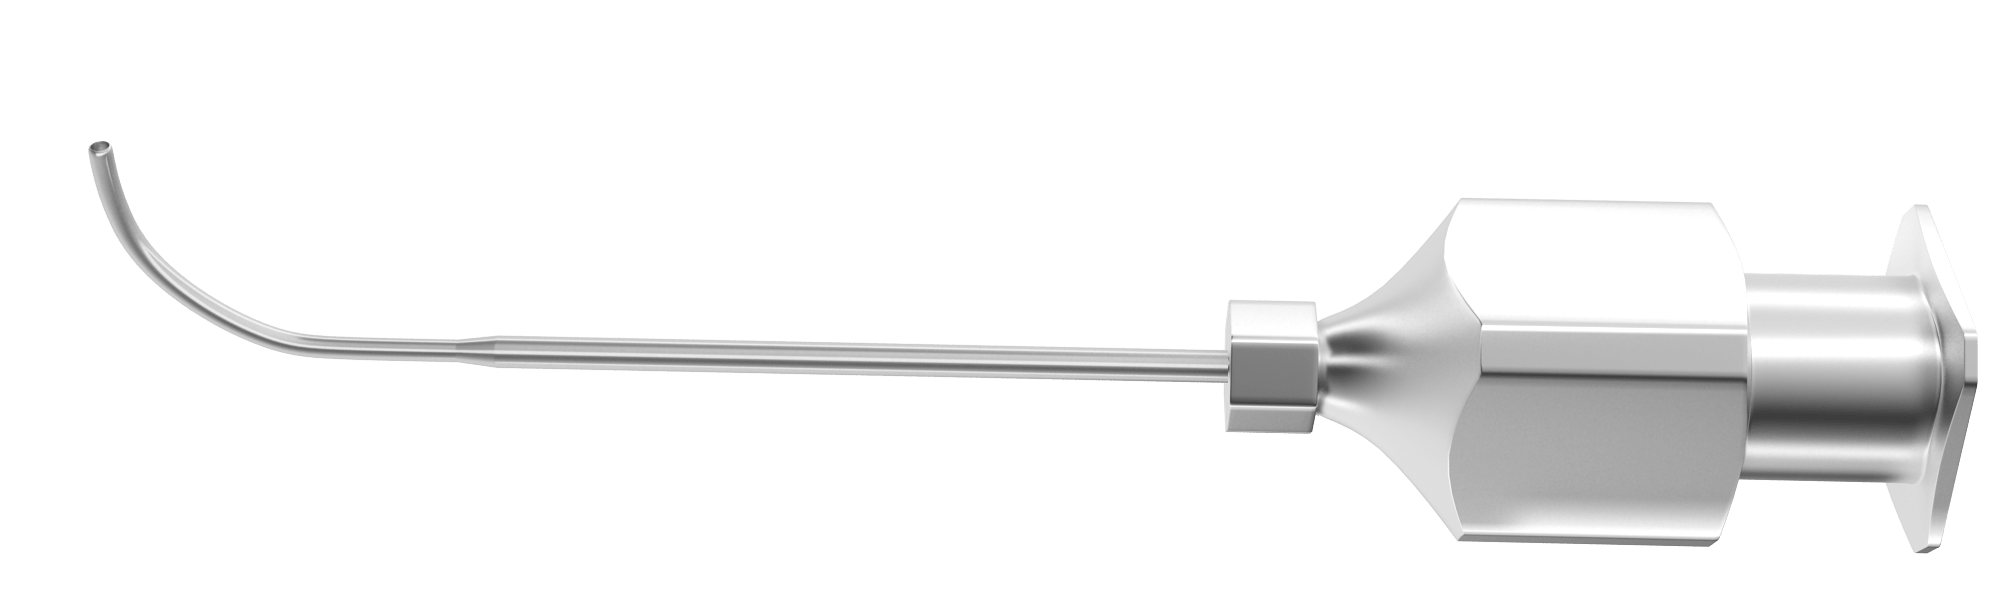 398R 15-029 Lacrimal Cannula Reinforced, Curved, 23 Ga x 32 mm